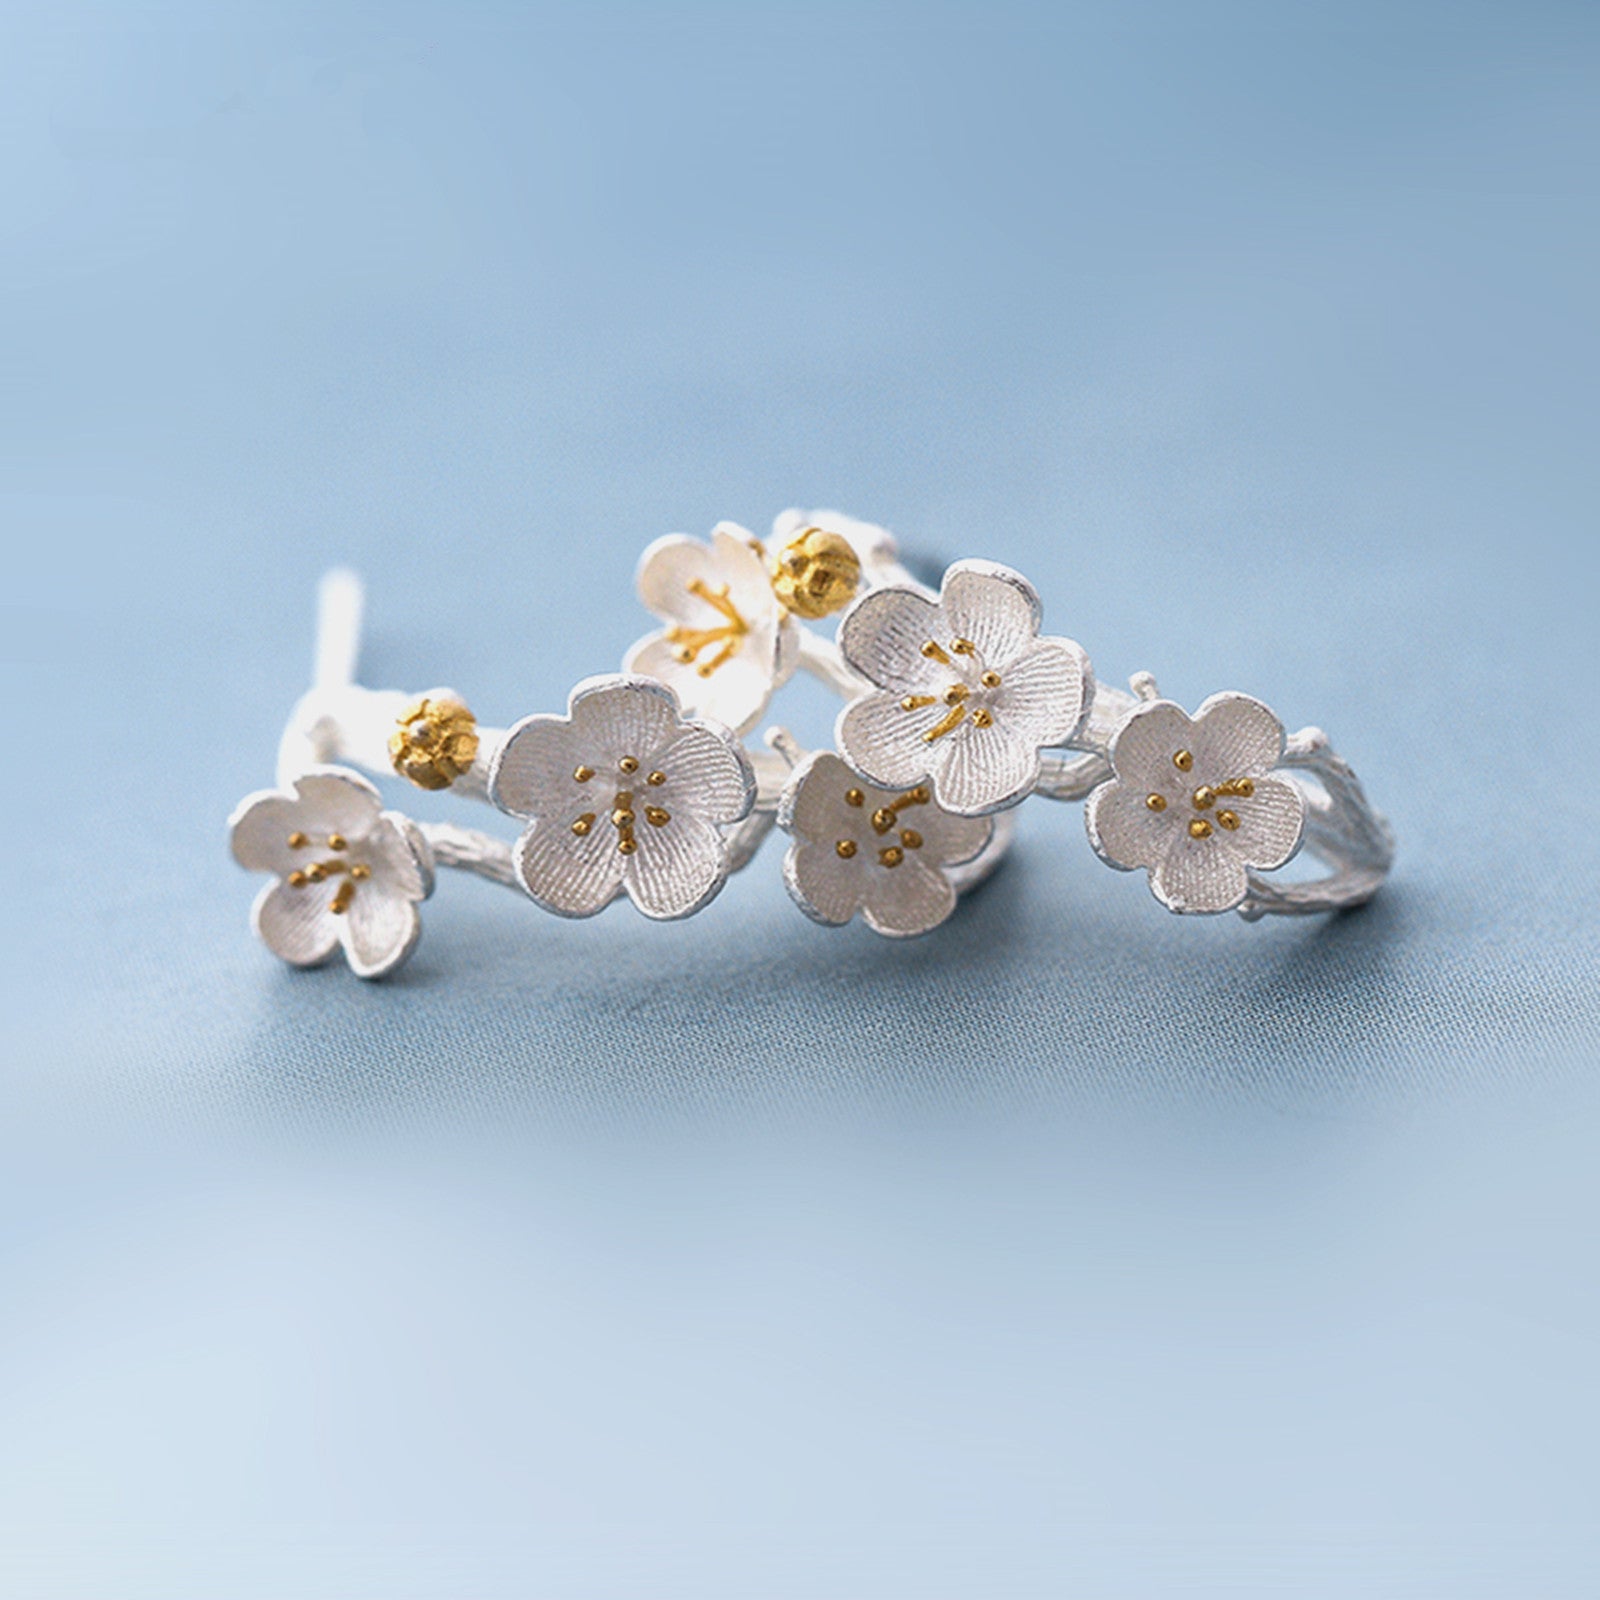 Sterling Silver and Gold Plum Blossom Stud Earrings - Dainty Flower Branch Line Design - sugarkittenlondon